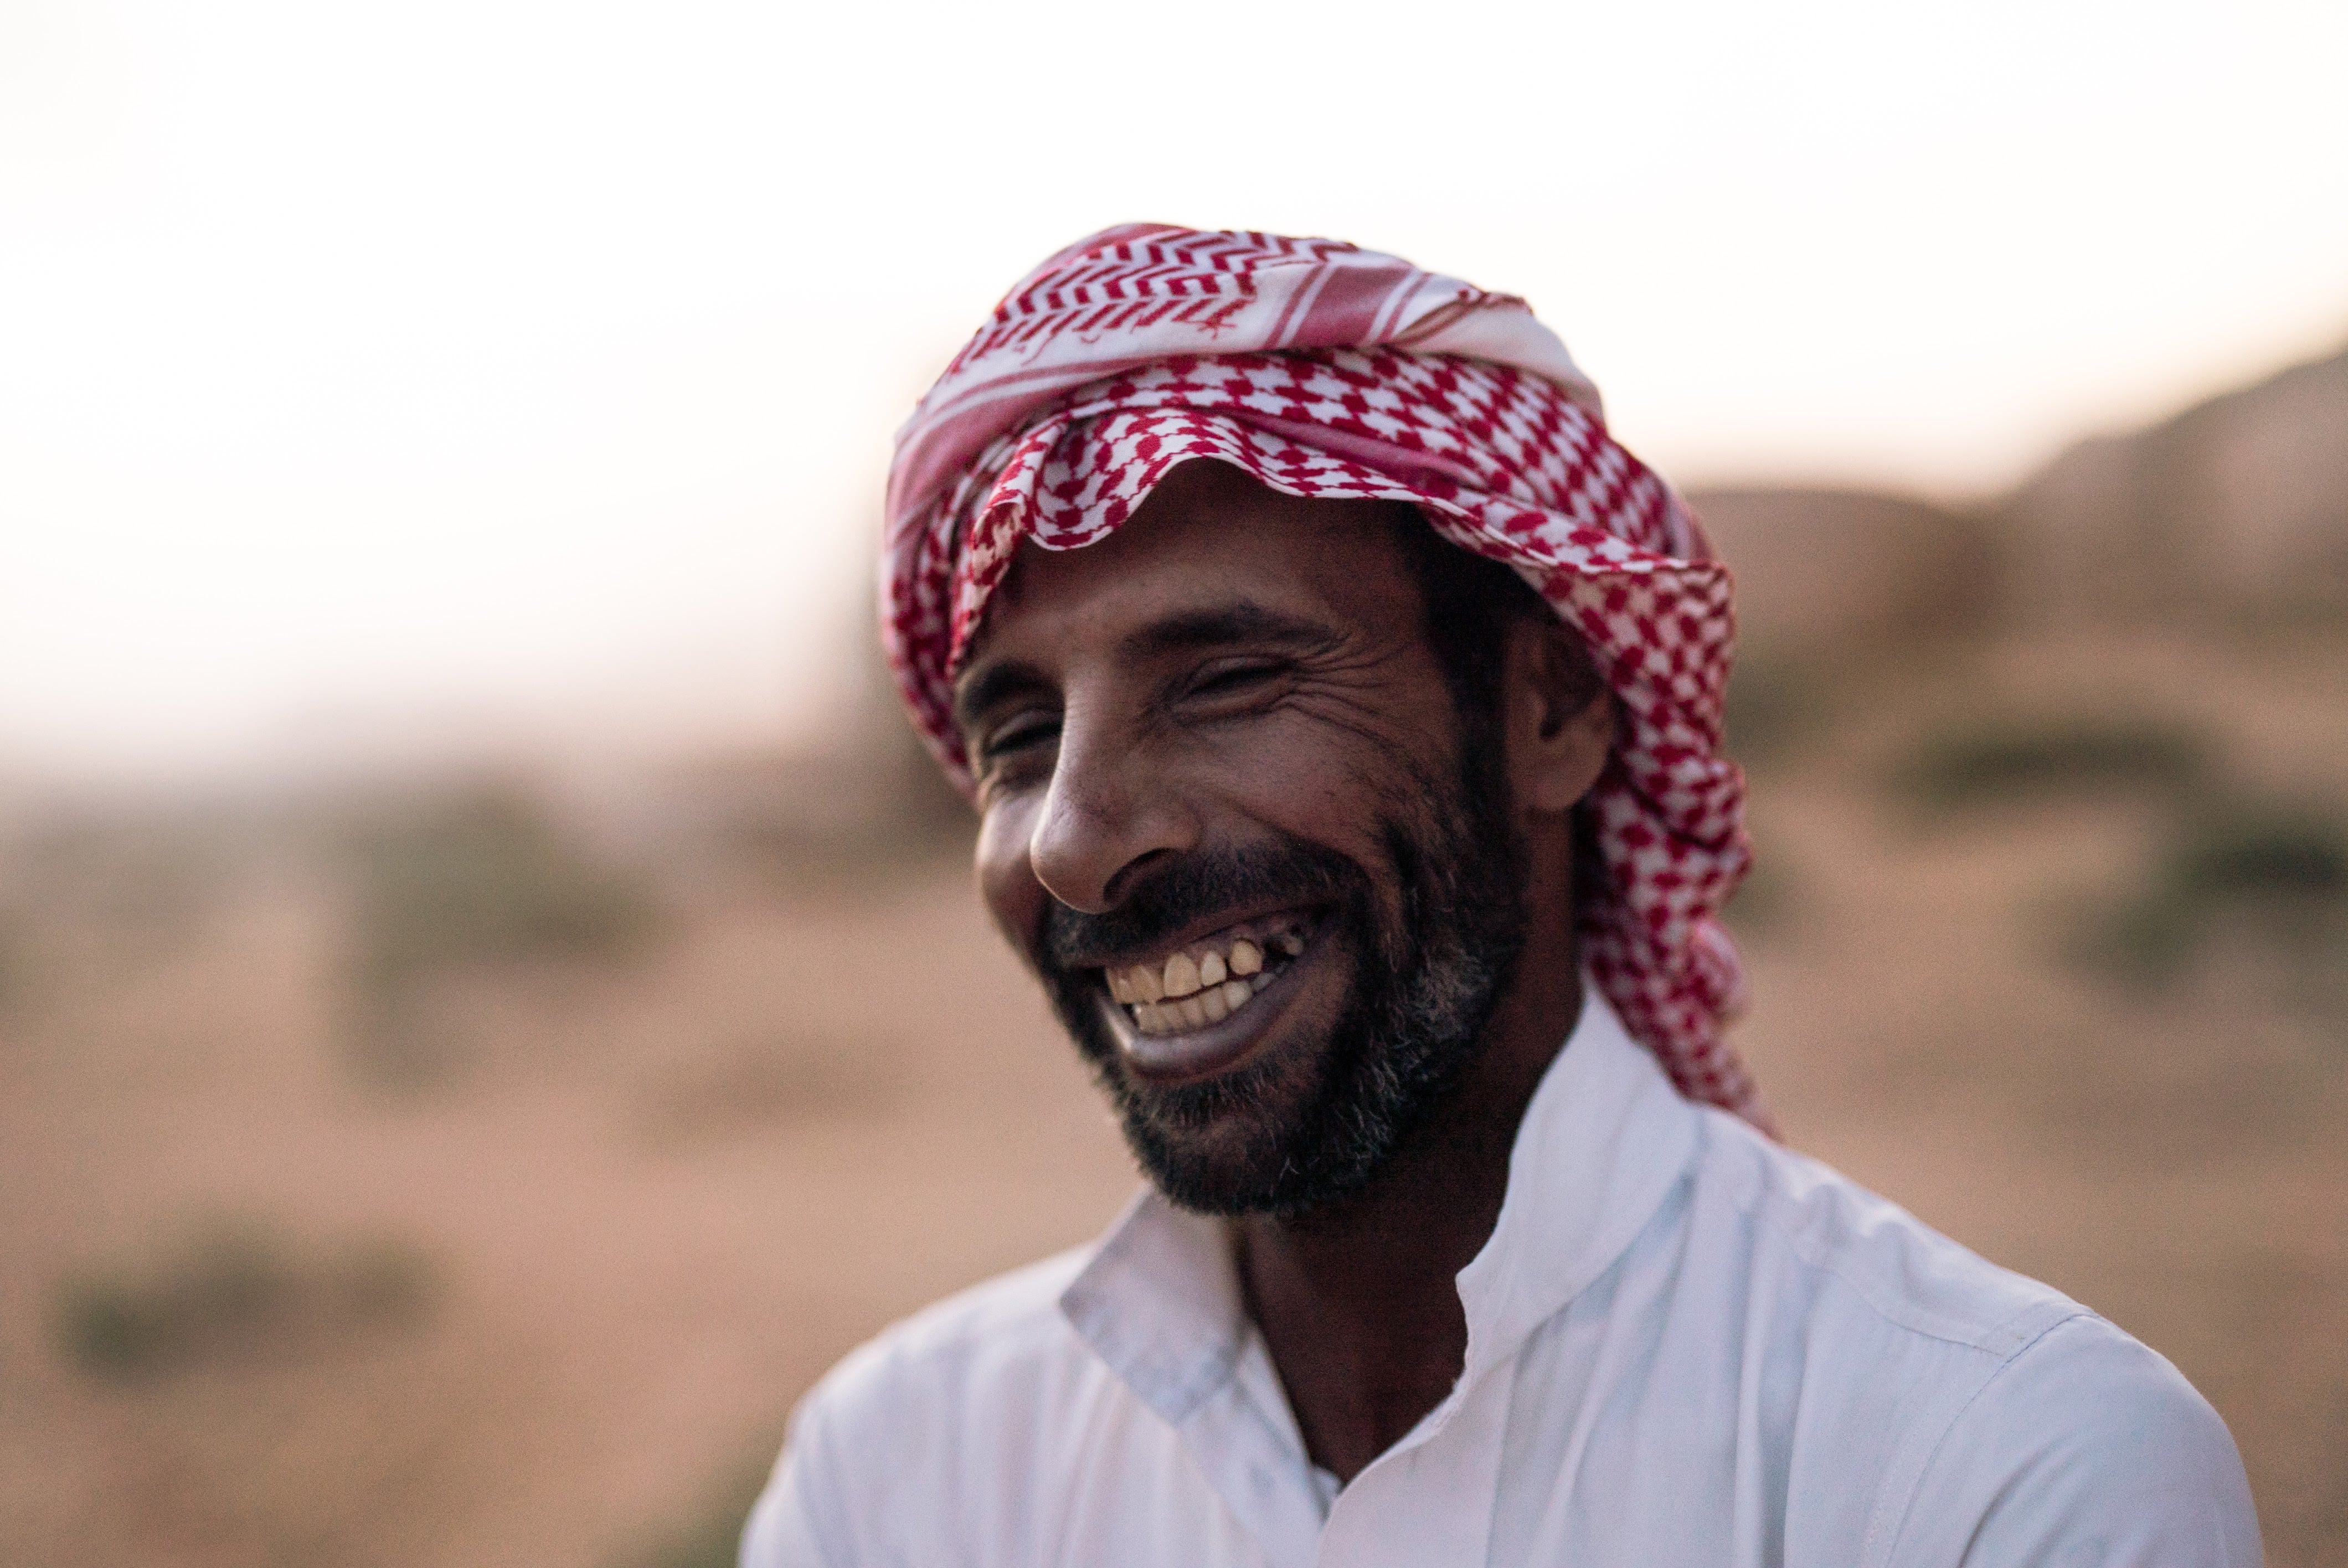 Meeting a Bedouin Jordanian